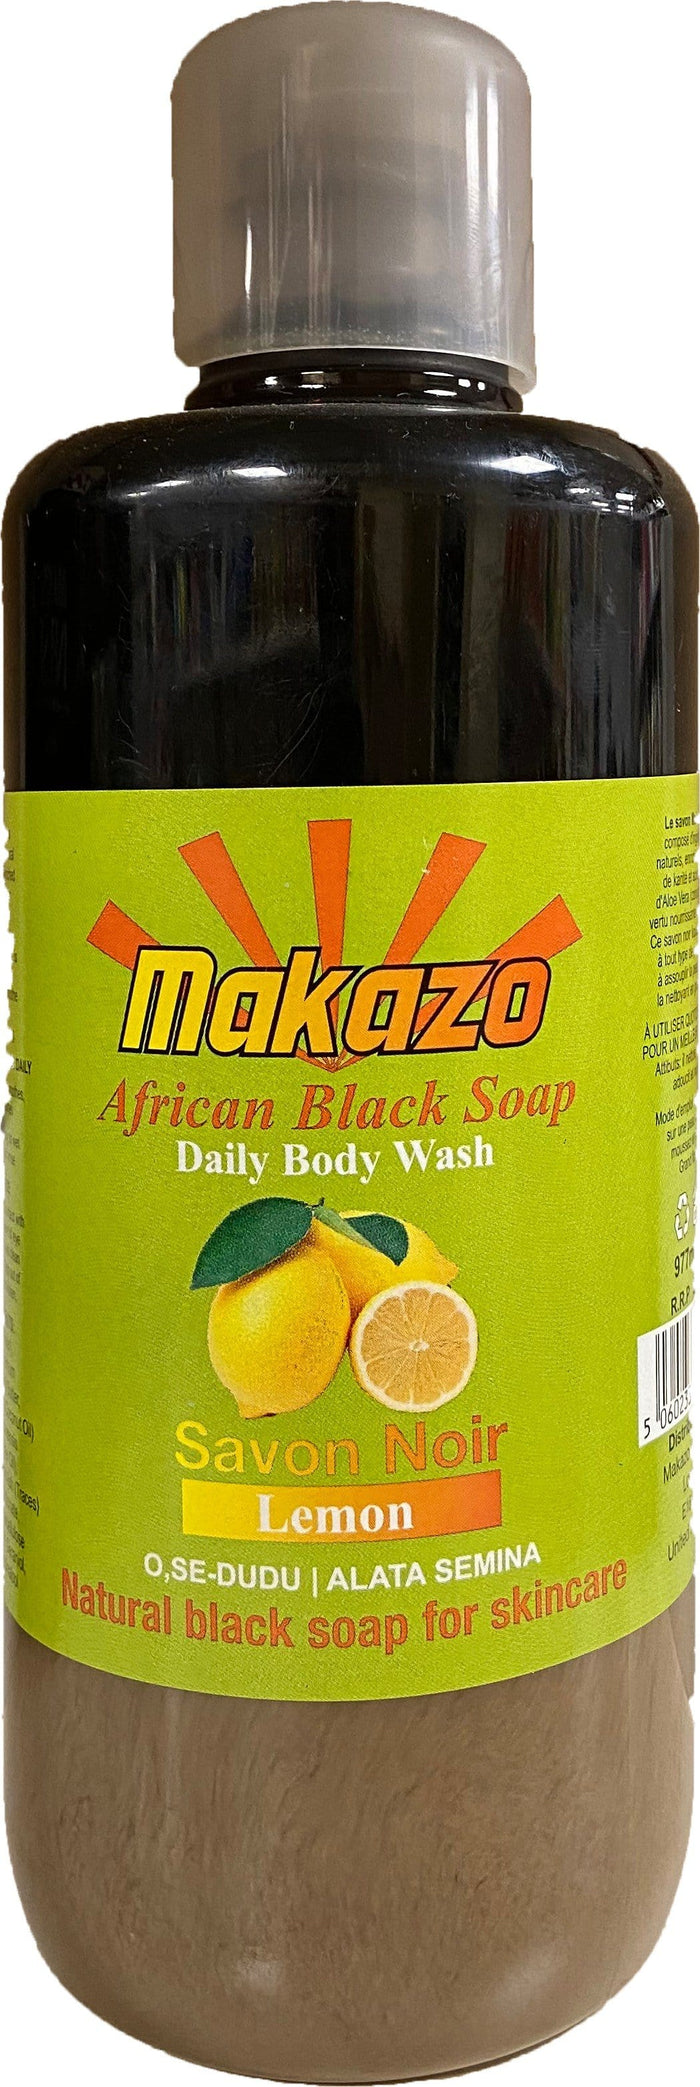 African Black Soap - Makazo African Black Soap Lemon 977 ml